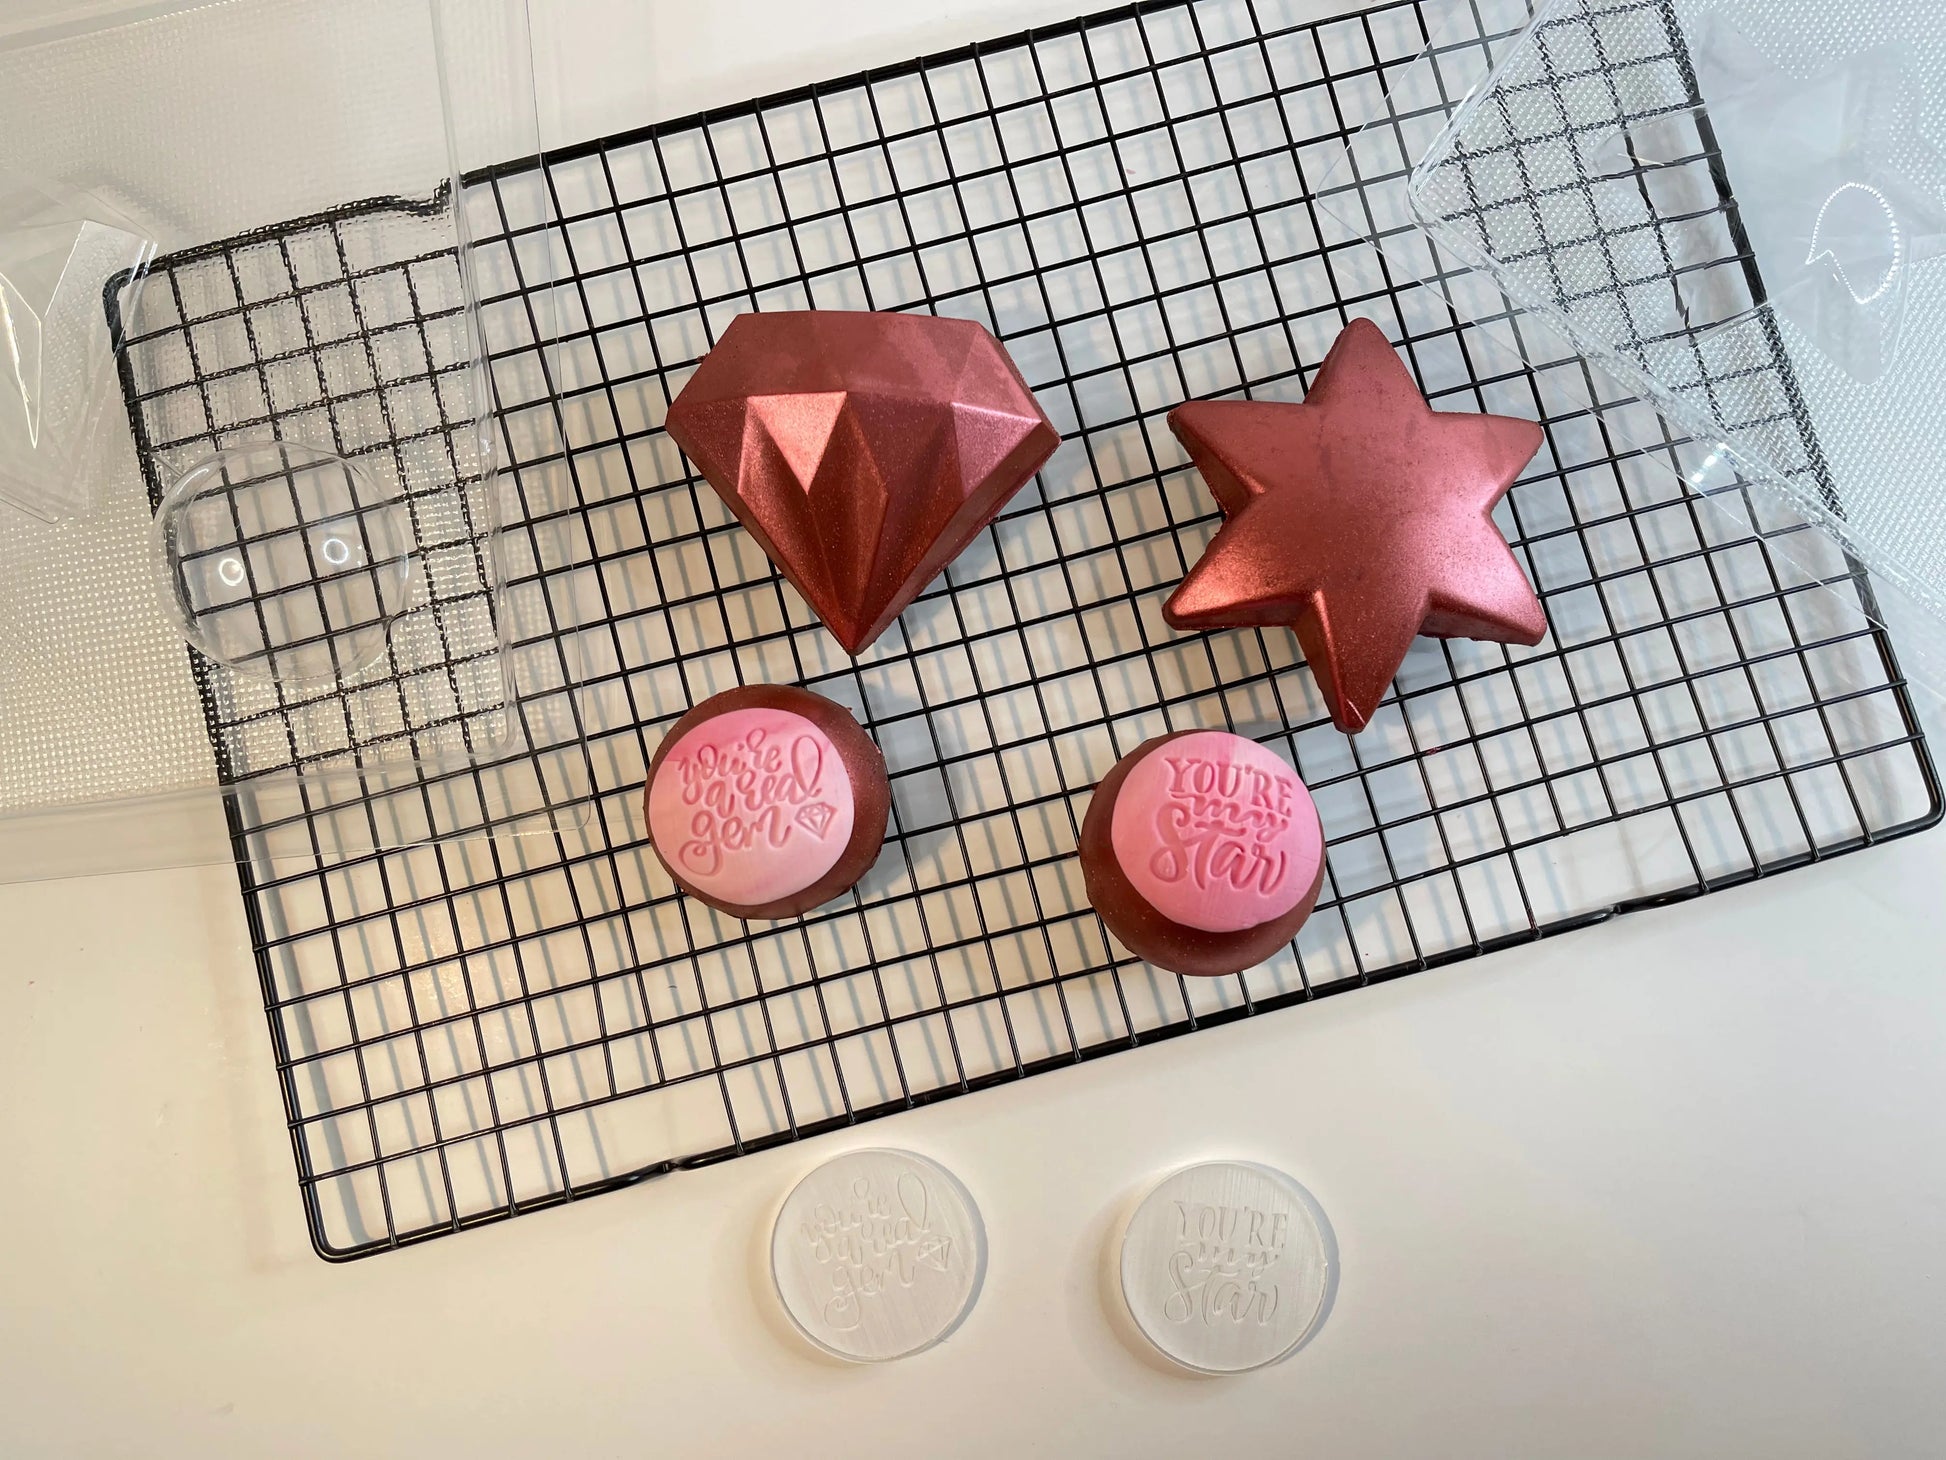 Diamond - St. valentine - Chocolate mould - Diamond and half sphere MEG cookie cutters